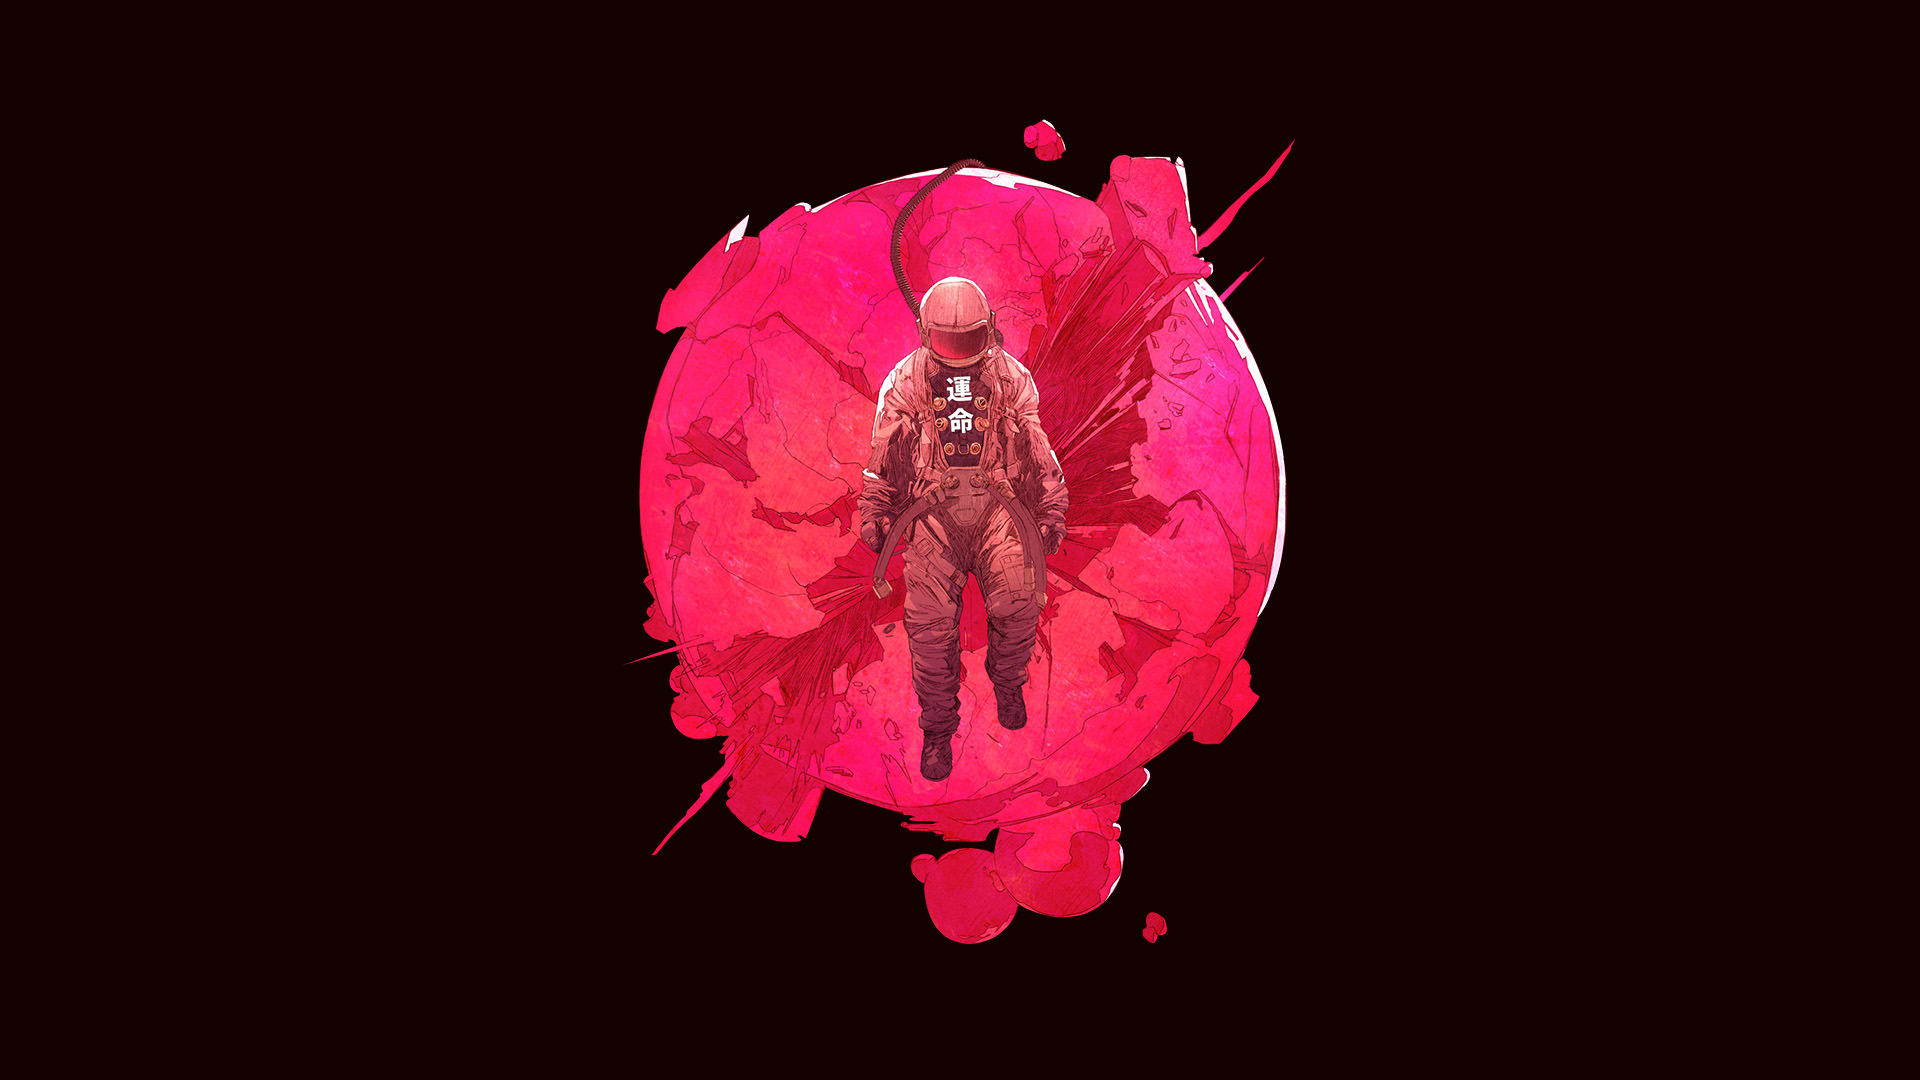 Digital Art Astronaut Science Fiction Minimalism Pink Red Chun Lo 1920x1080